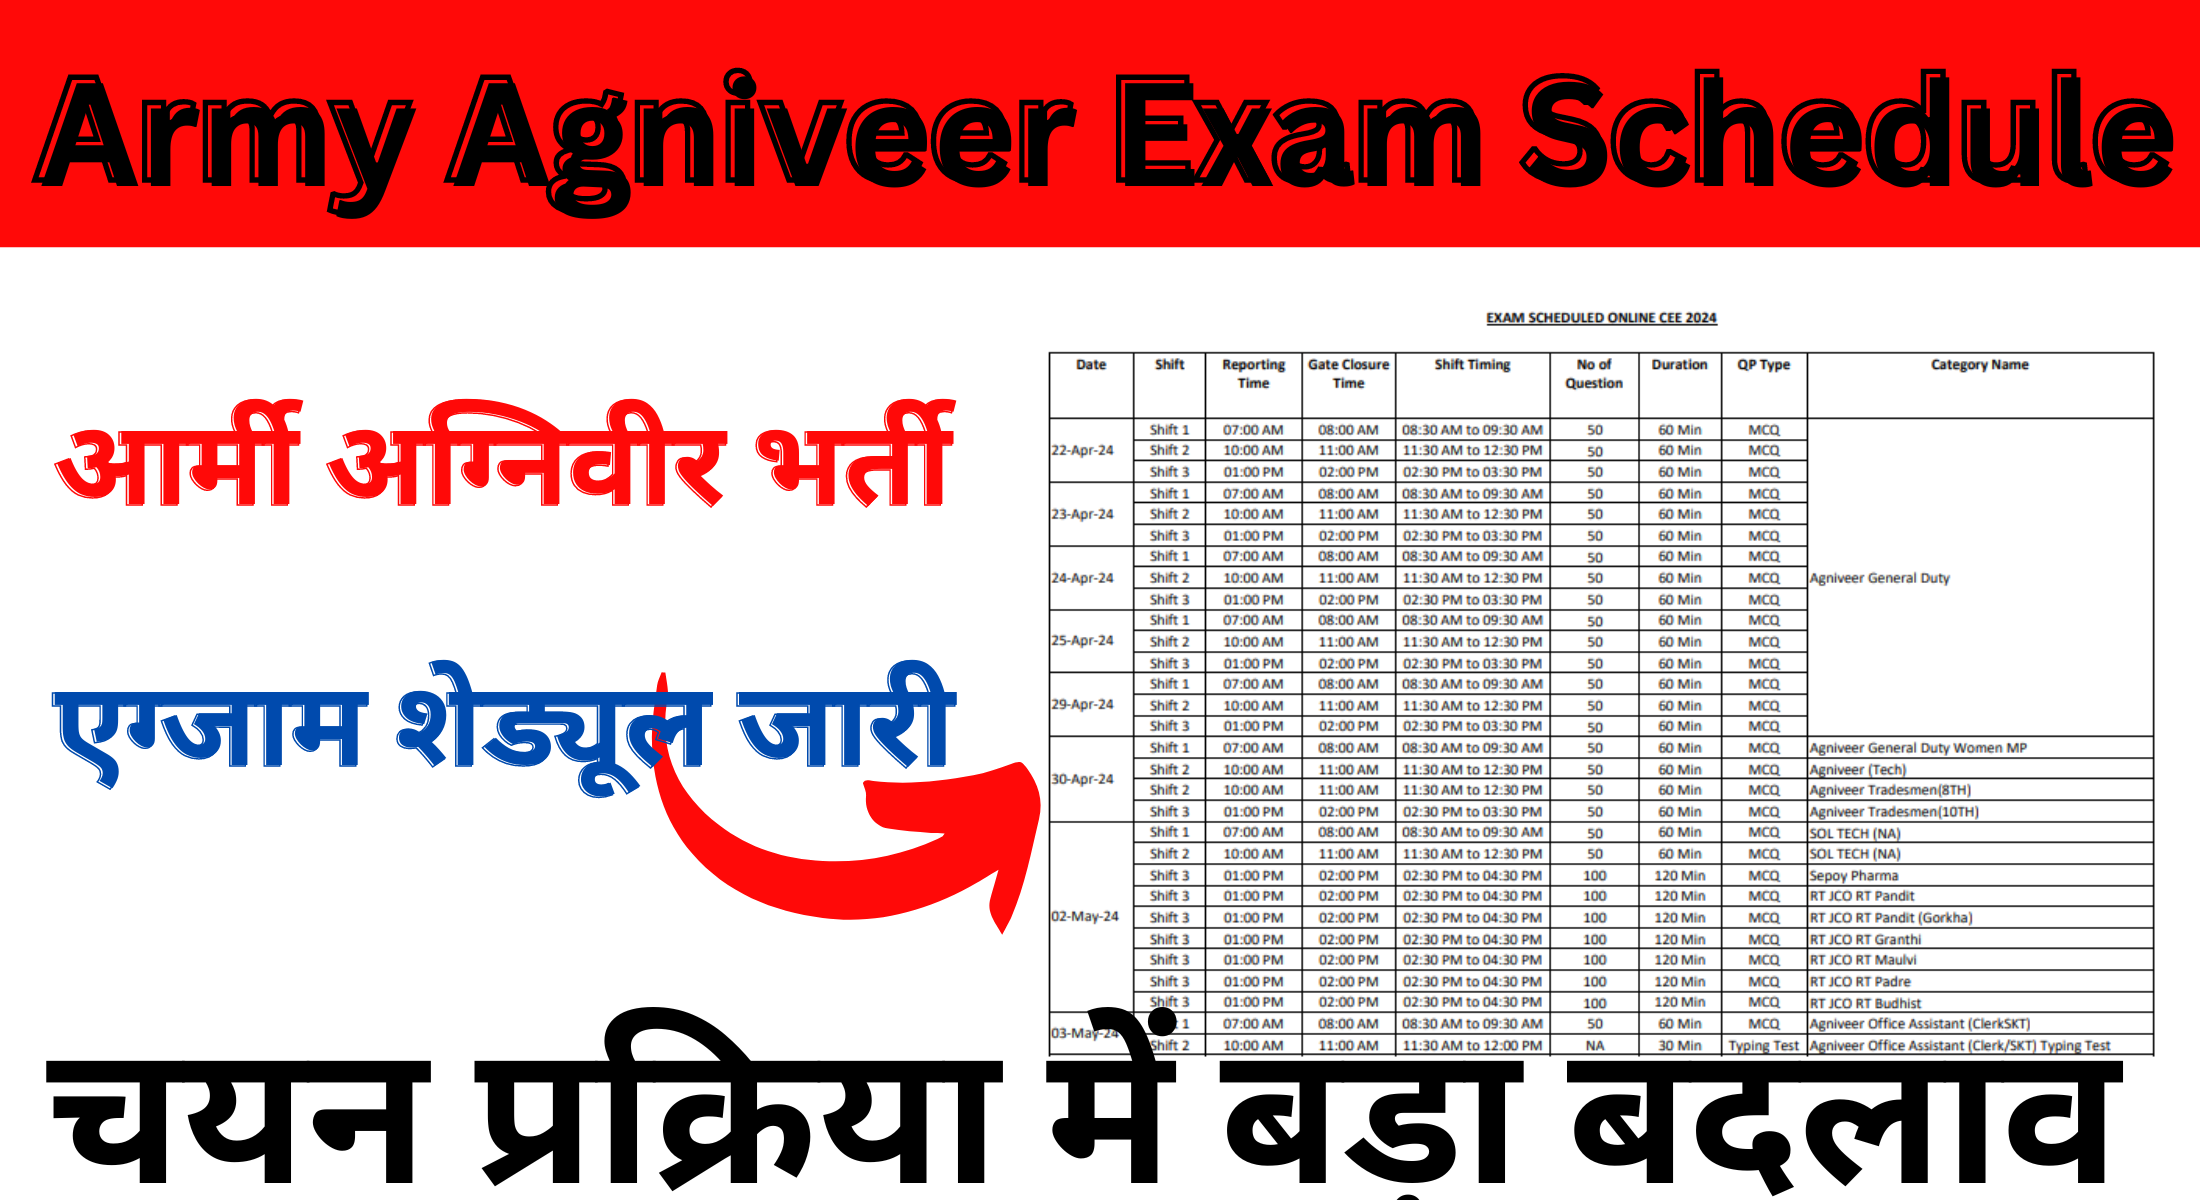 Army Agniveer Exam Schedule